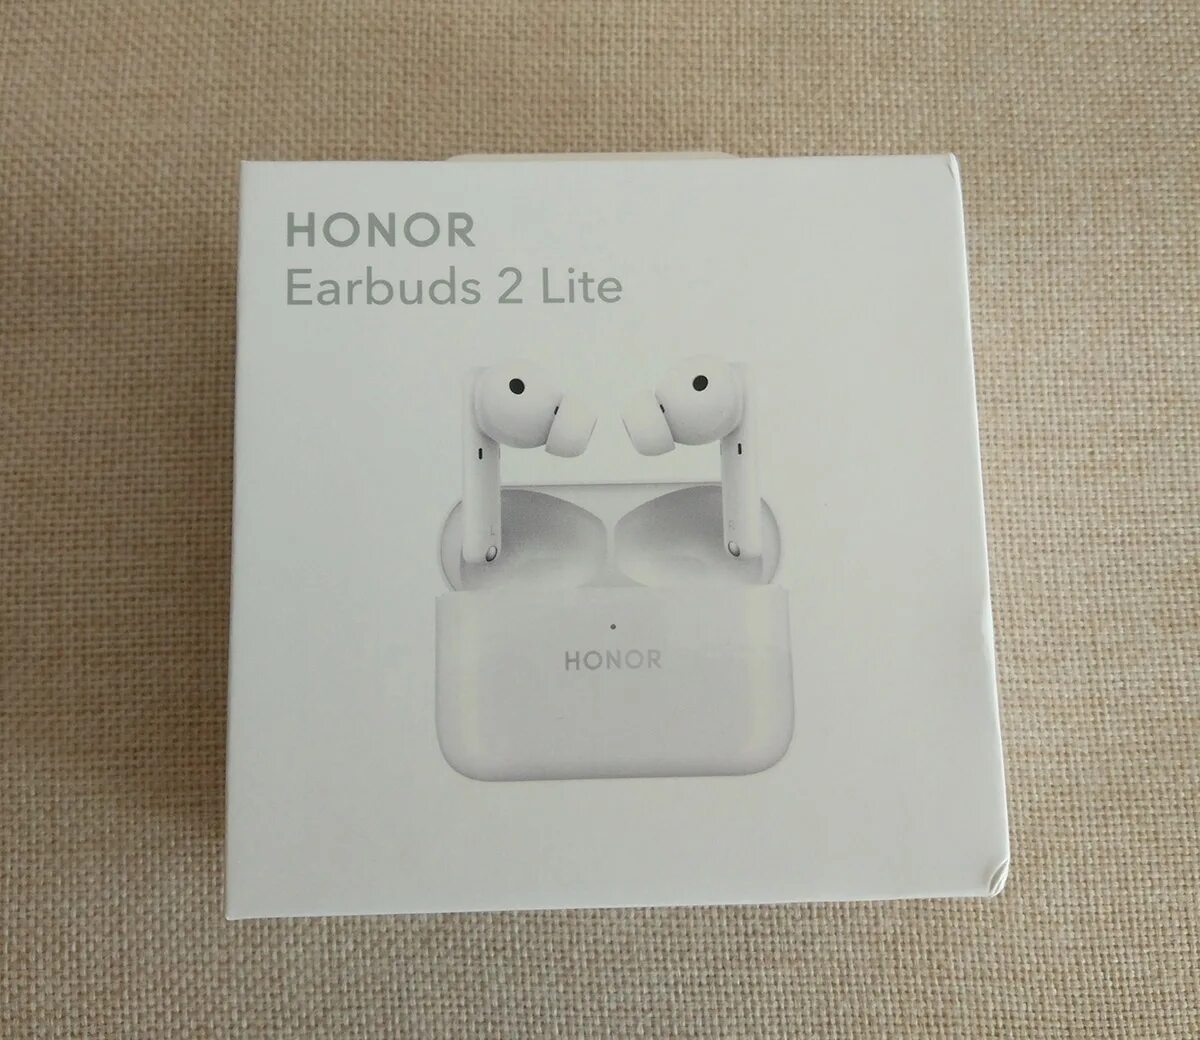 Наушники хонор Earbuds 2 Lite. Honor Earbuds 2 Lite t0005. Наушники хонор Earbuds 2 Lite коробка. TWS Honor Earbuds 2 Lite приложение. Honor не видит наушники